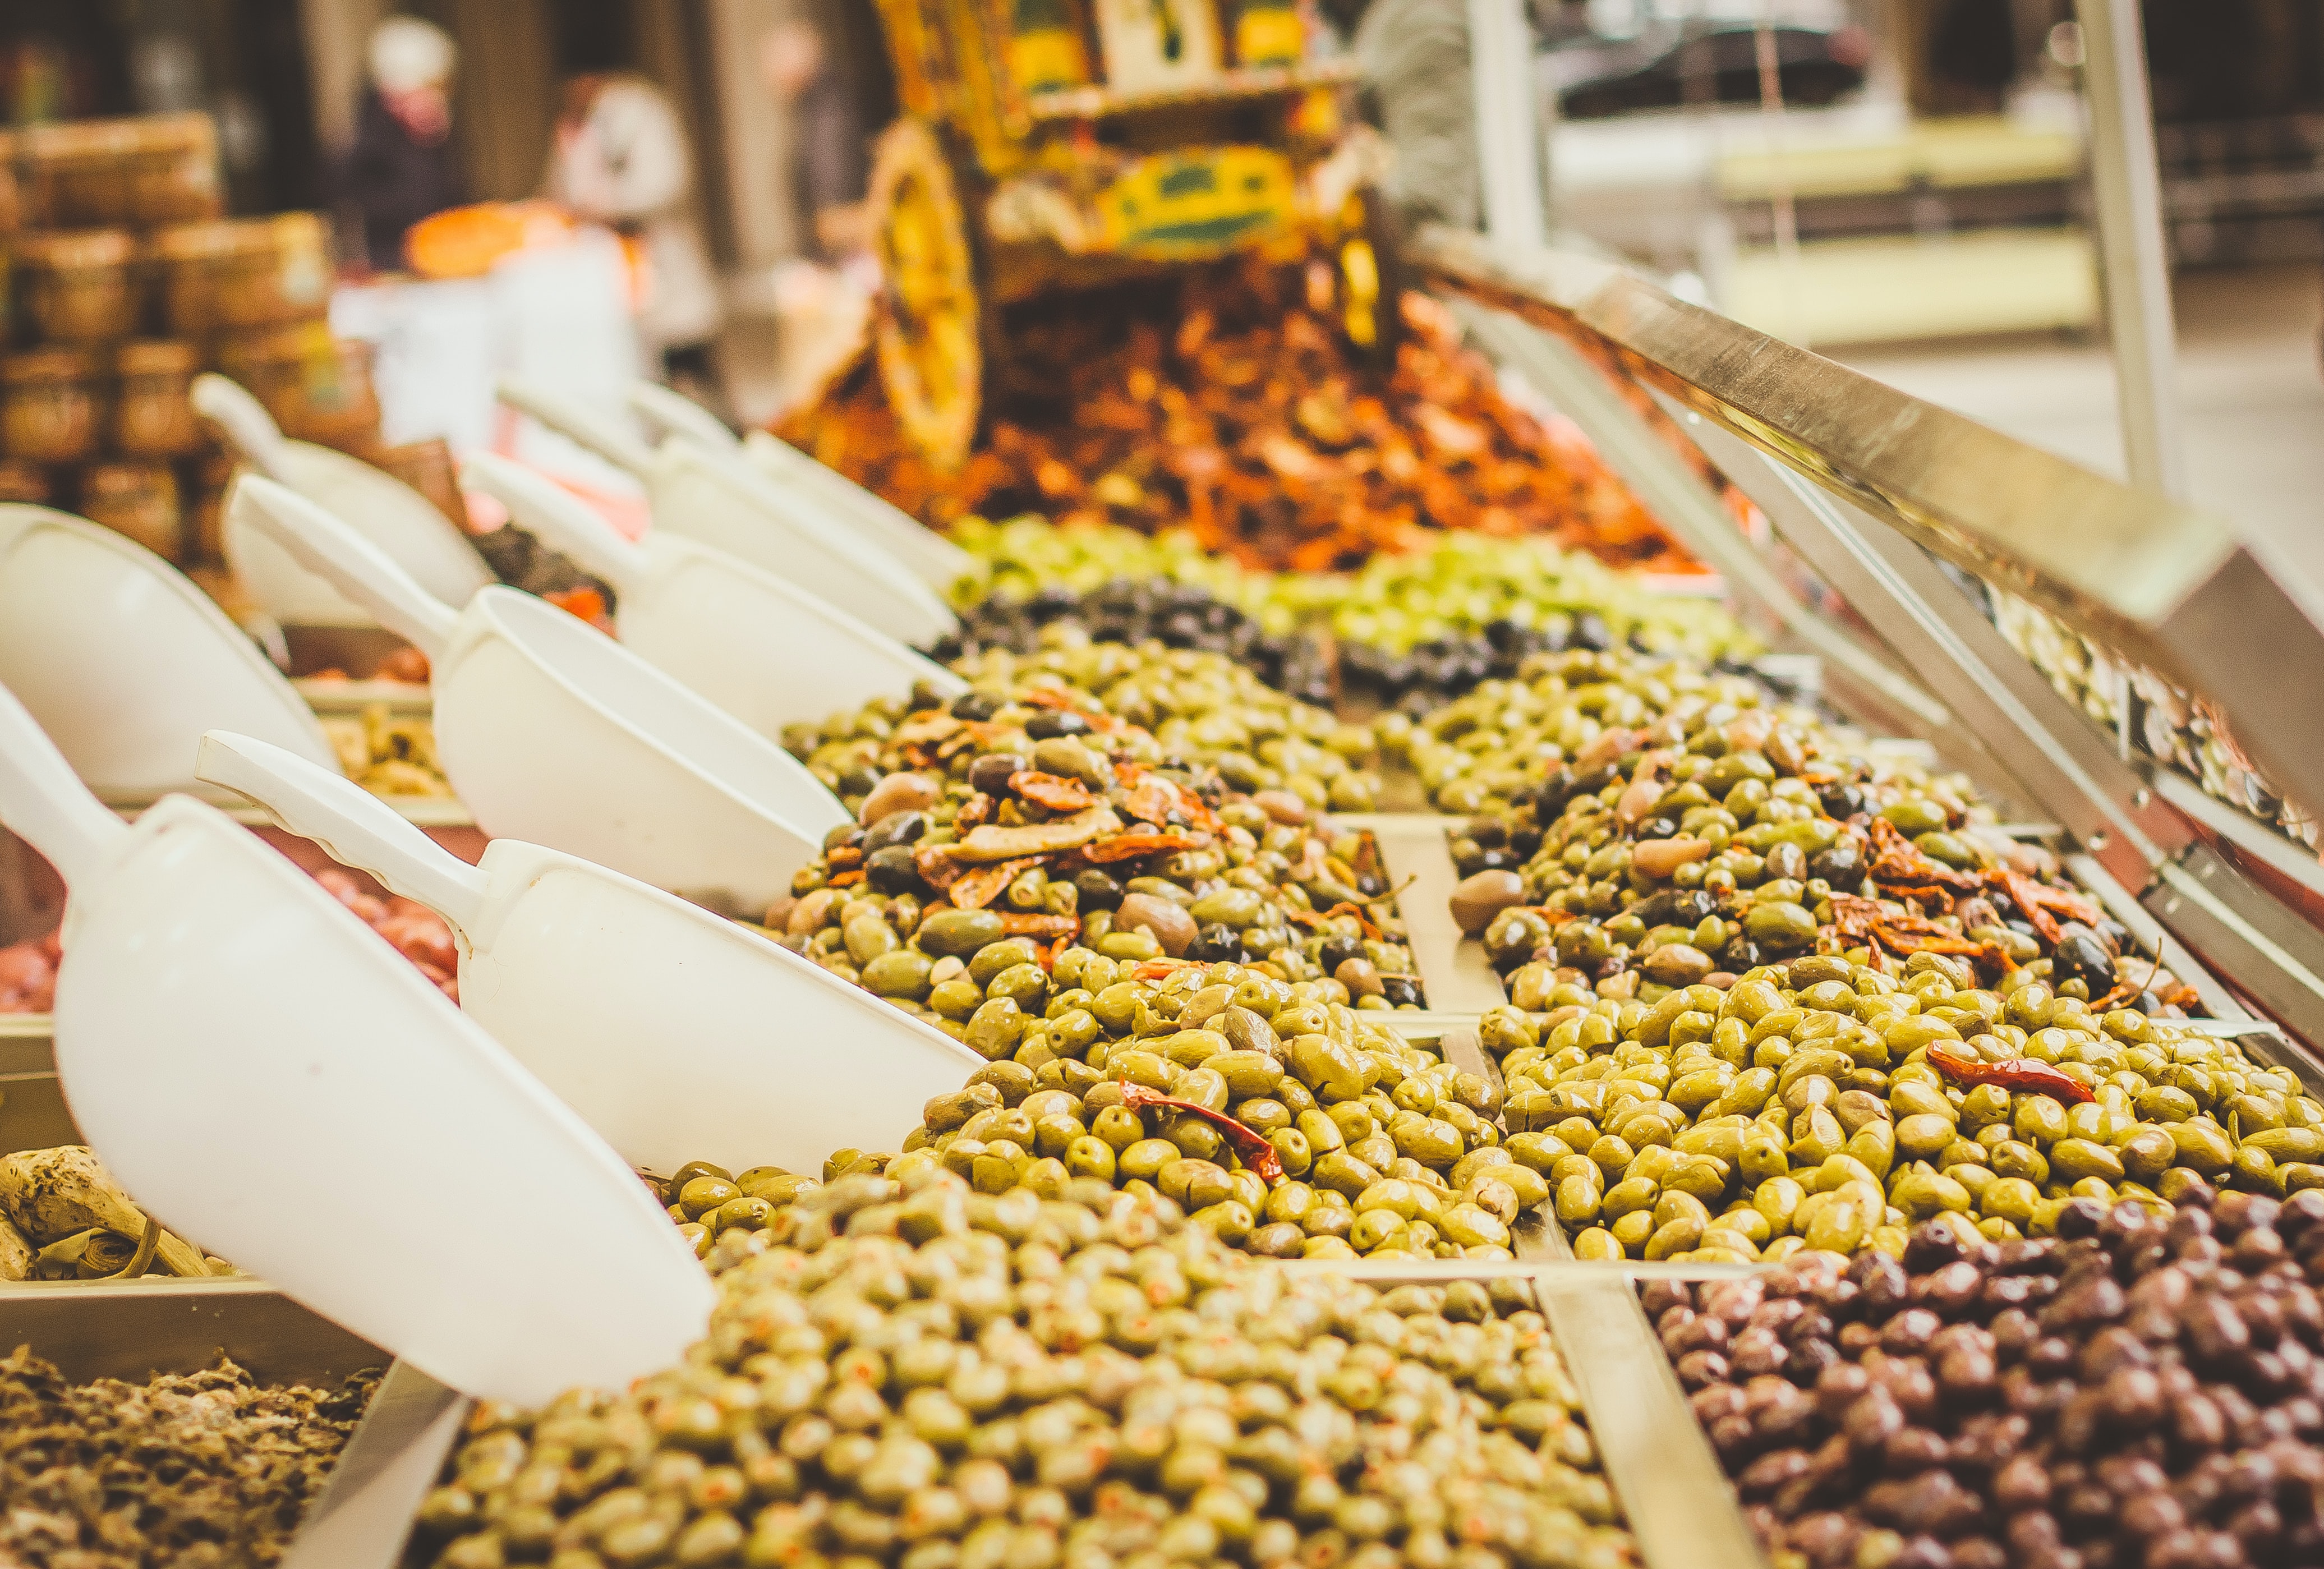 Dubai's external food trade reaches Dhs52 billion by 2020